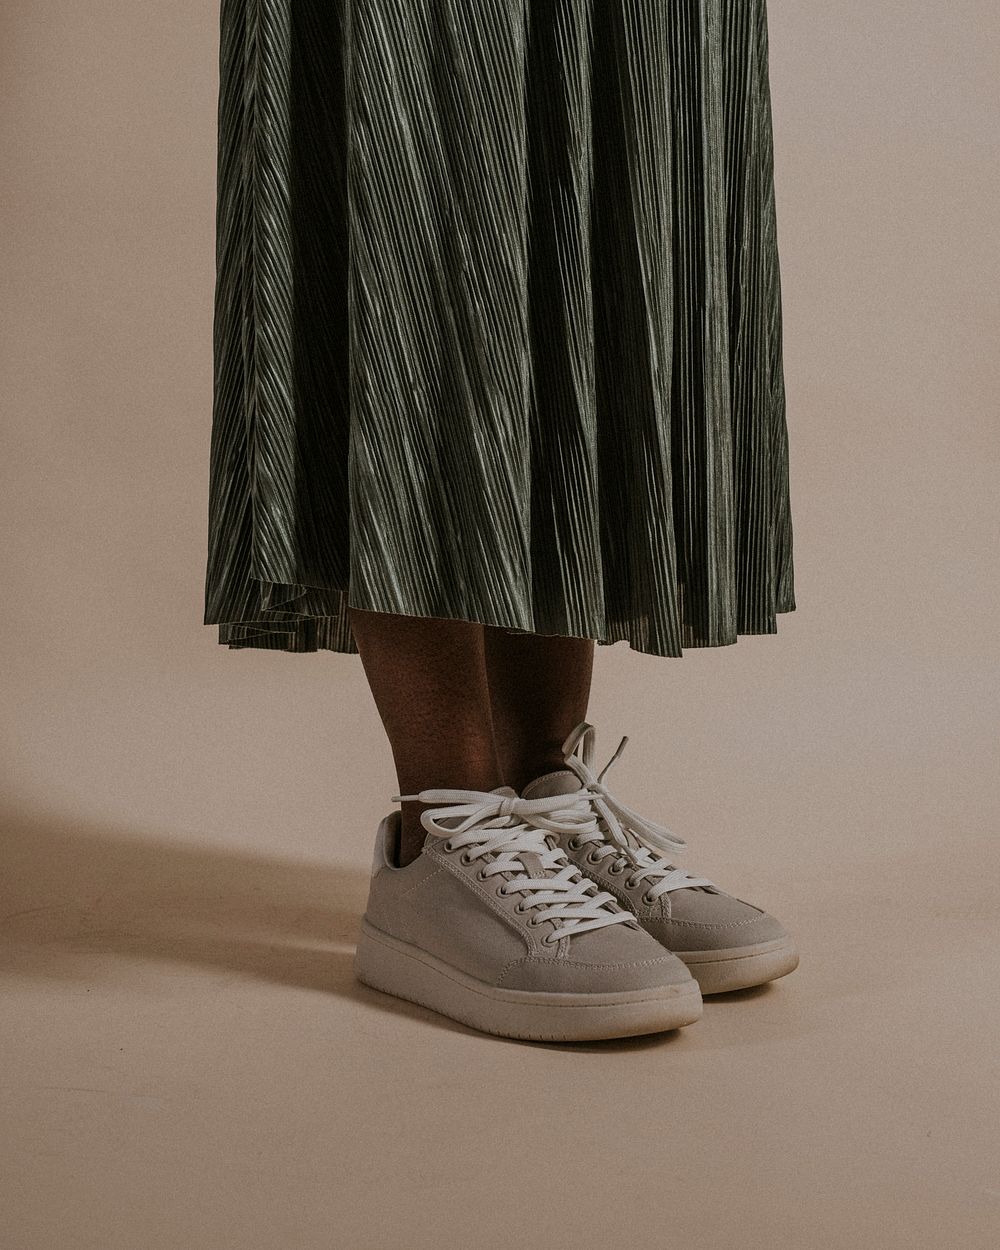 Women's green skirt, gray sneakers